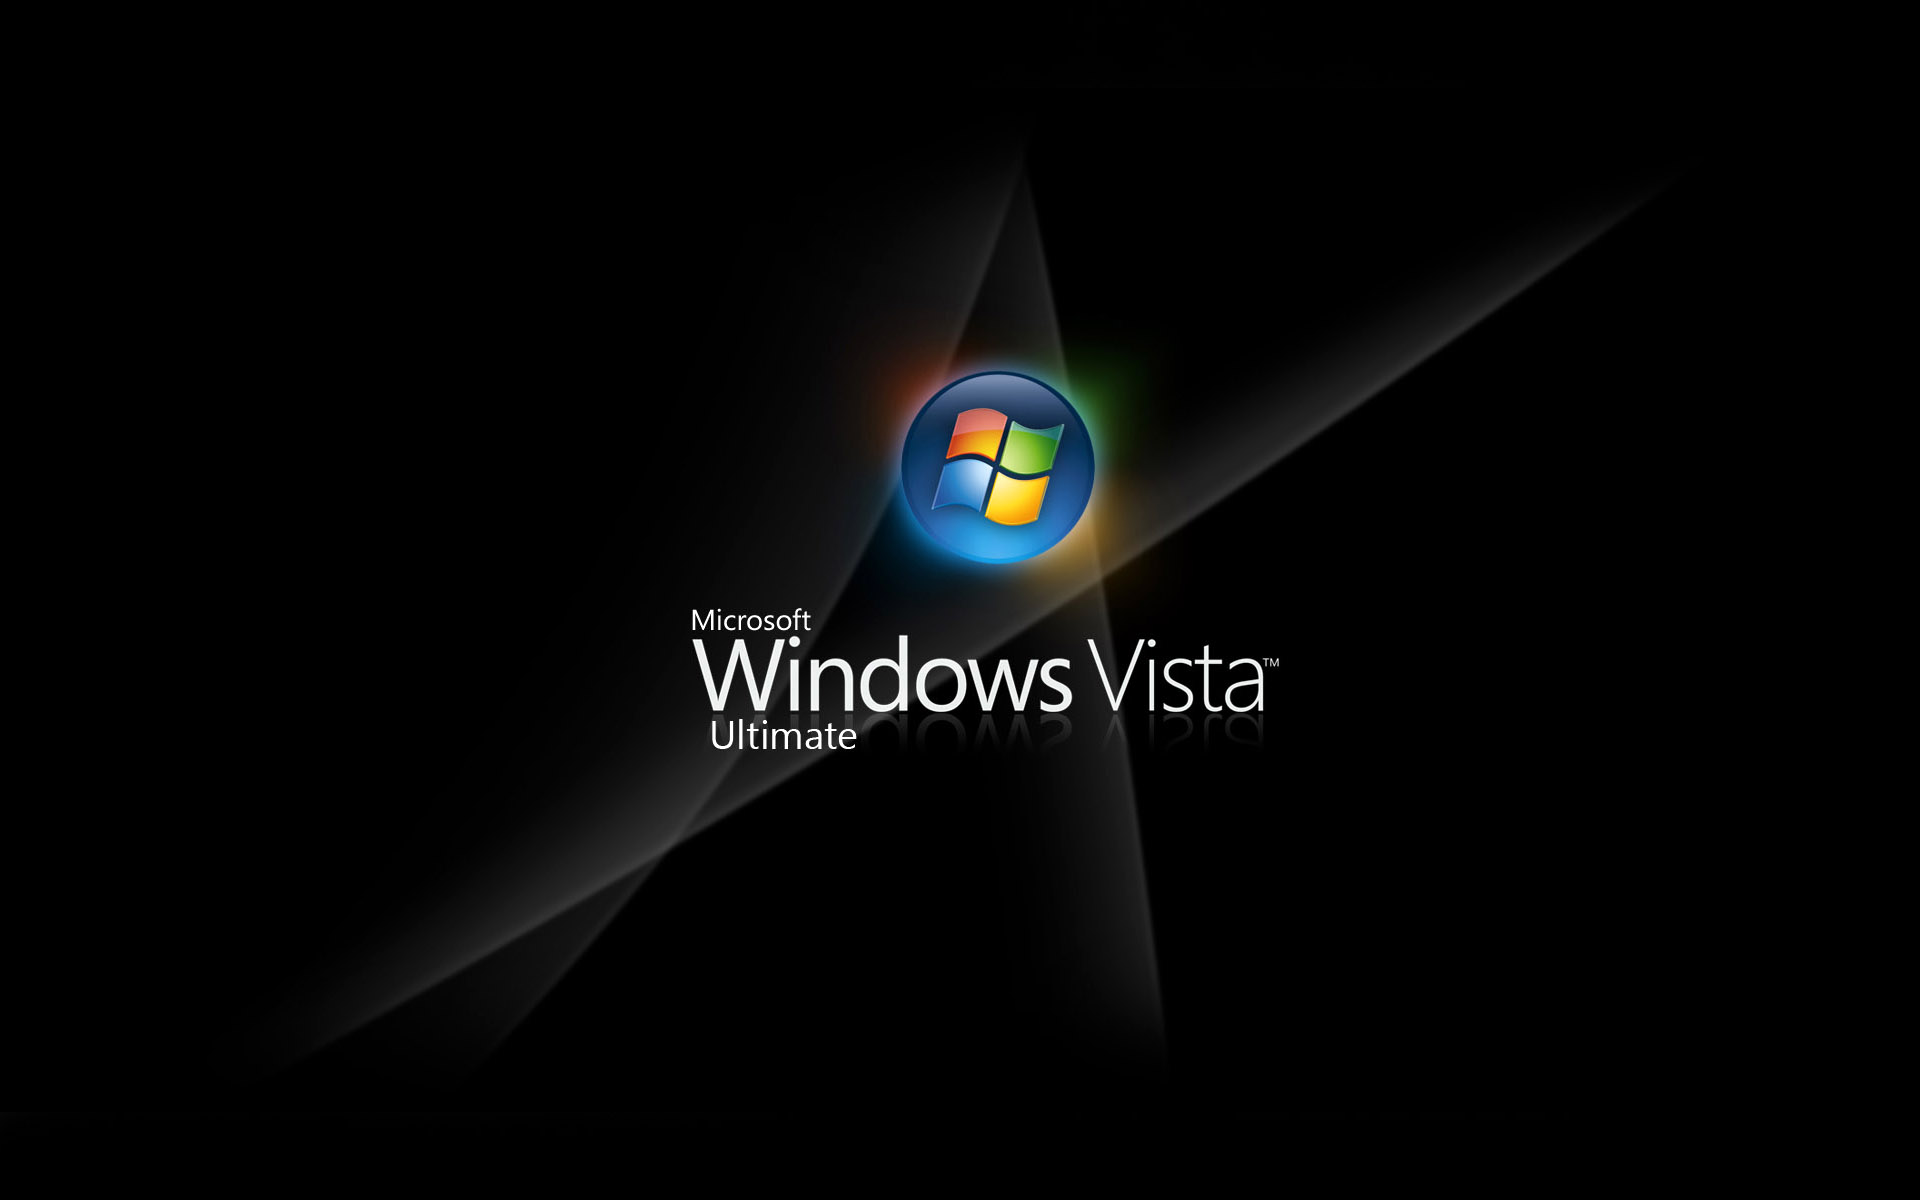 Microsoft, Microsoft Windows, Windows Vista, логотипы - обои на рабочий стол